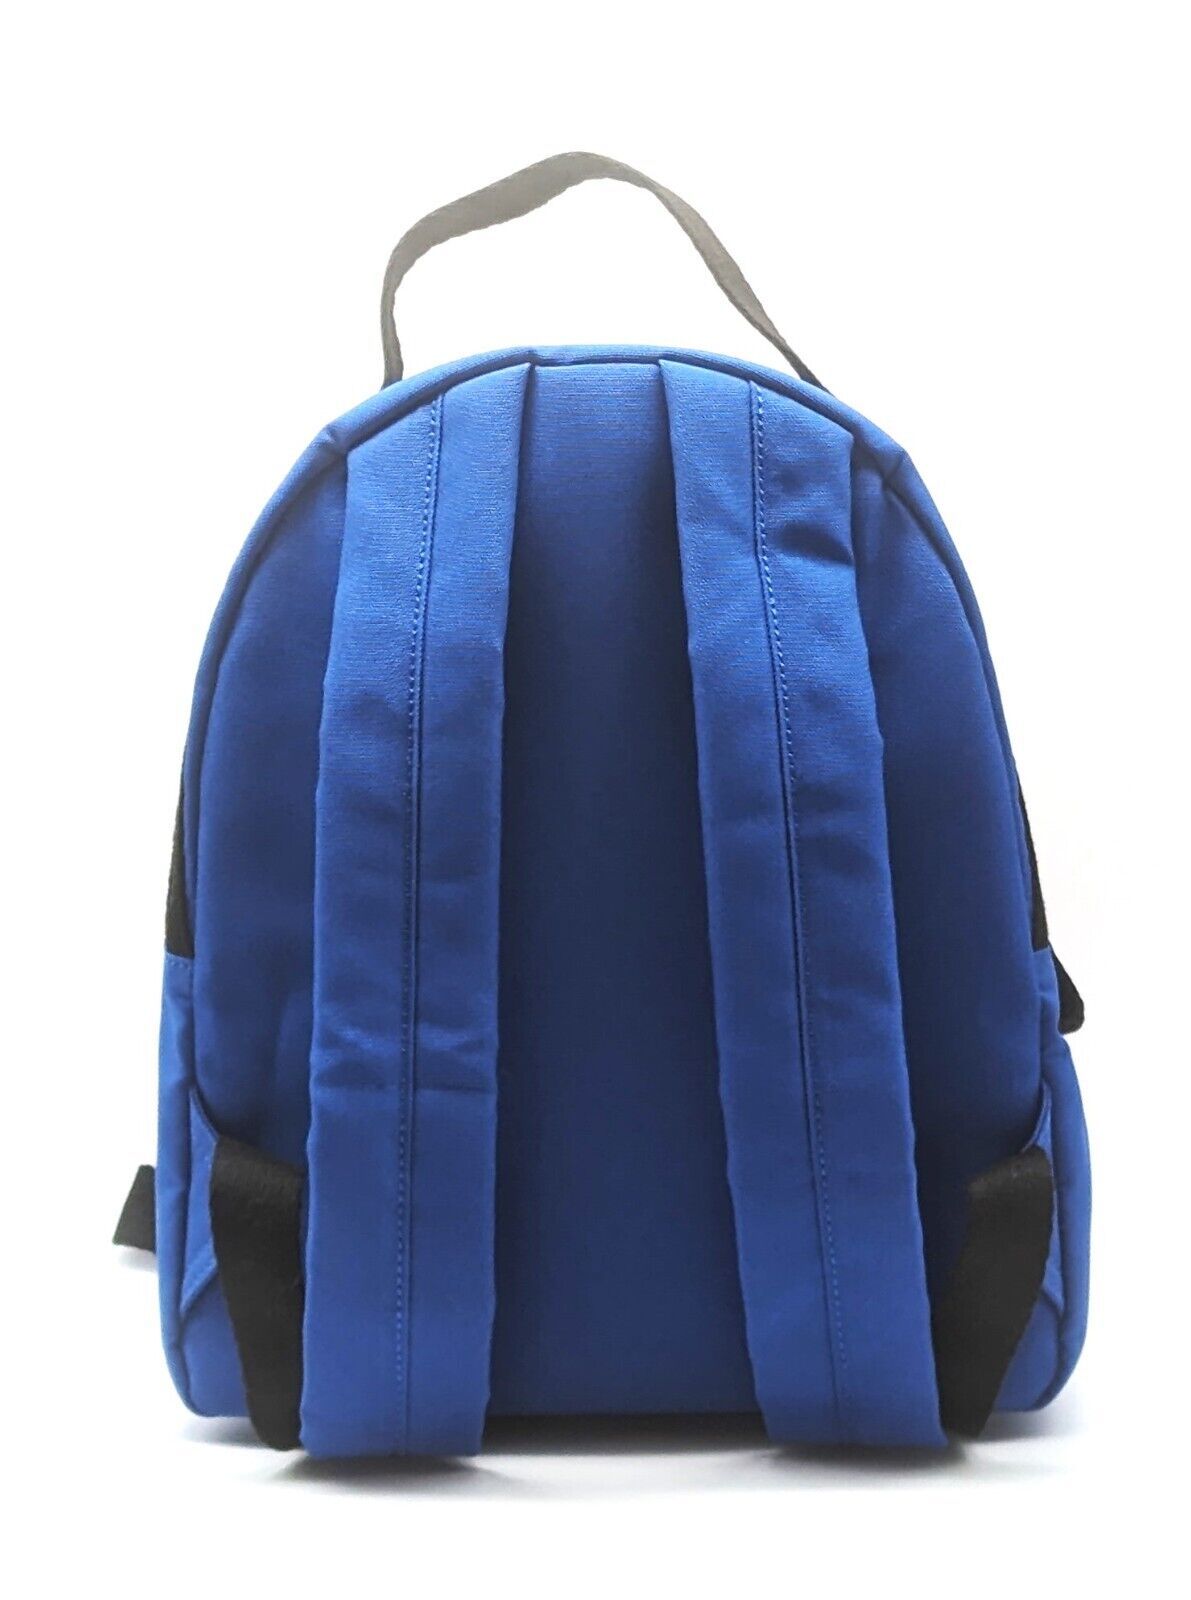 Gap Backpack Berkeley Blue mix RRP £39